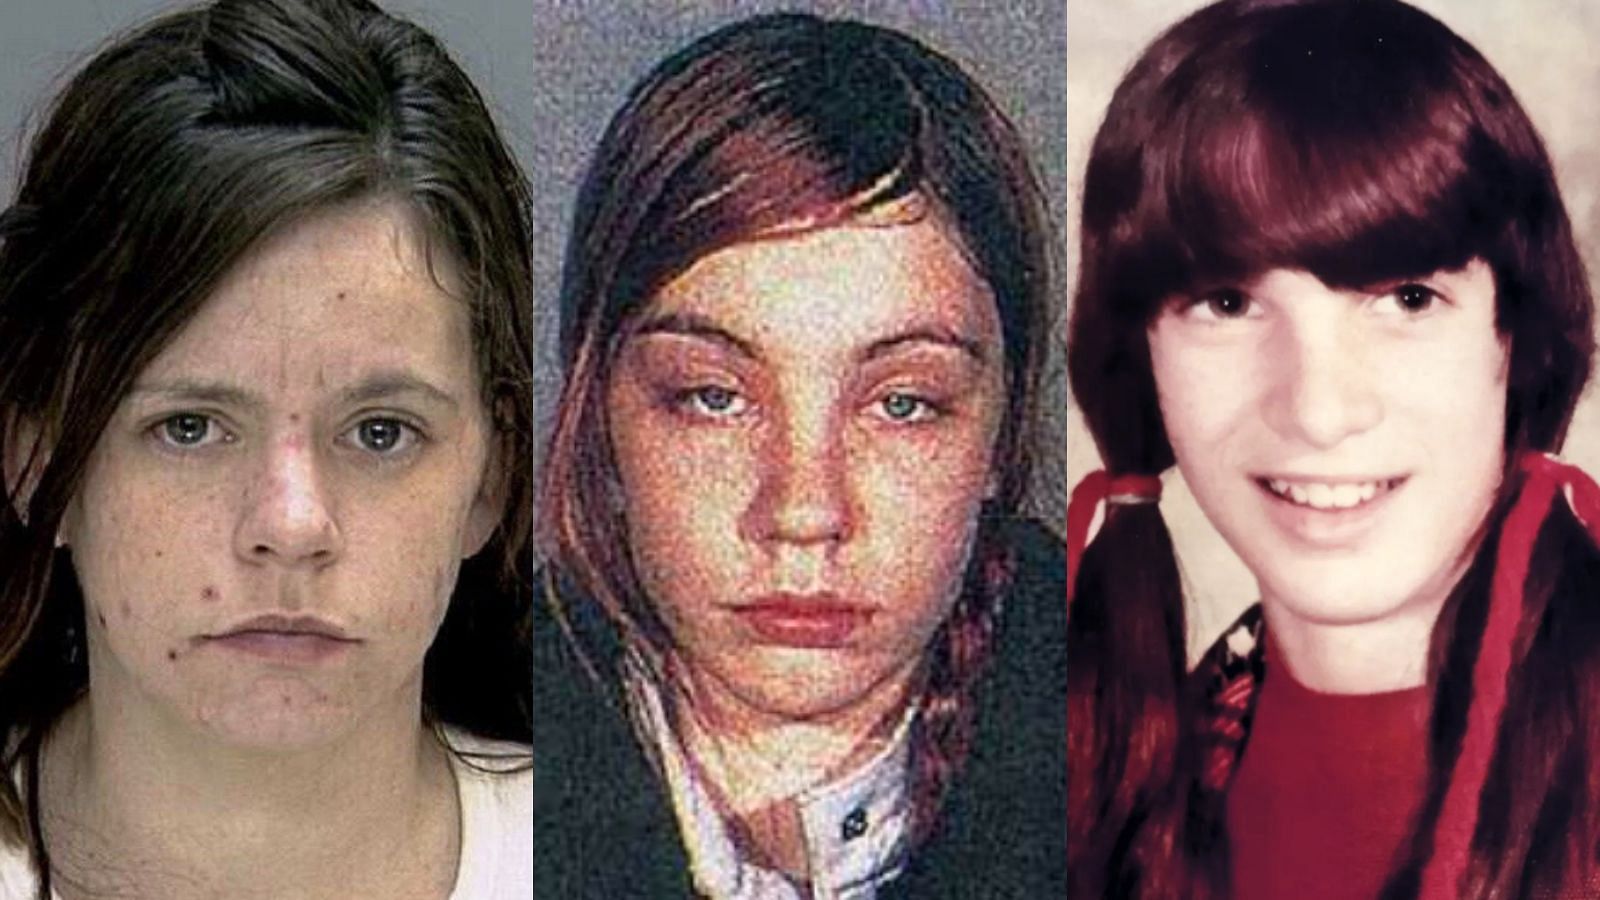 The three identified victims: Valerie Mack, Jessica Taylor, and Karen Vergata (Images via YouTube/ AL.com)